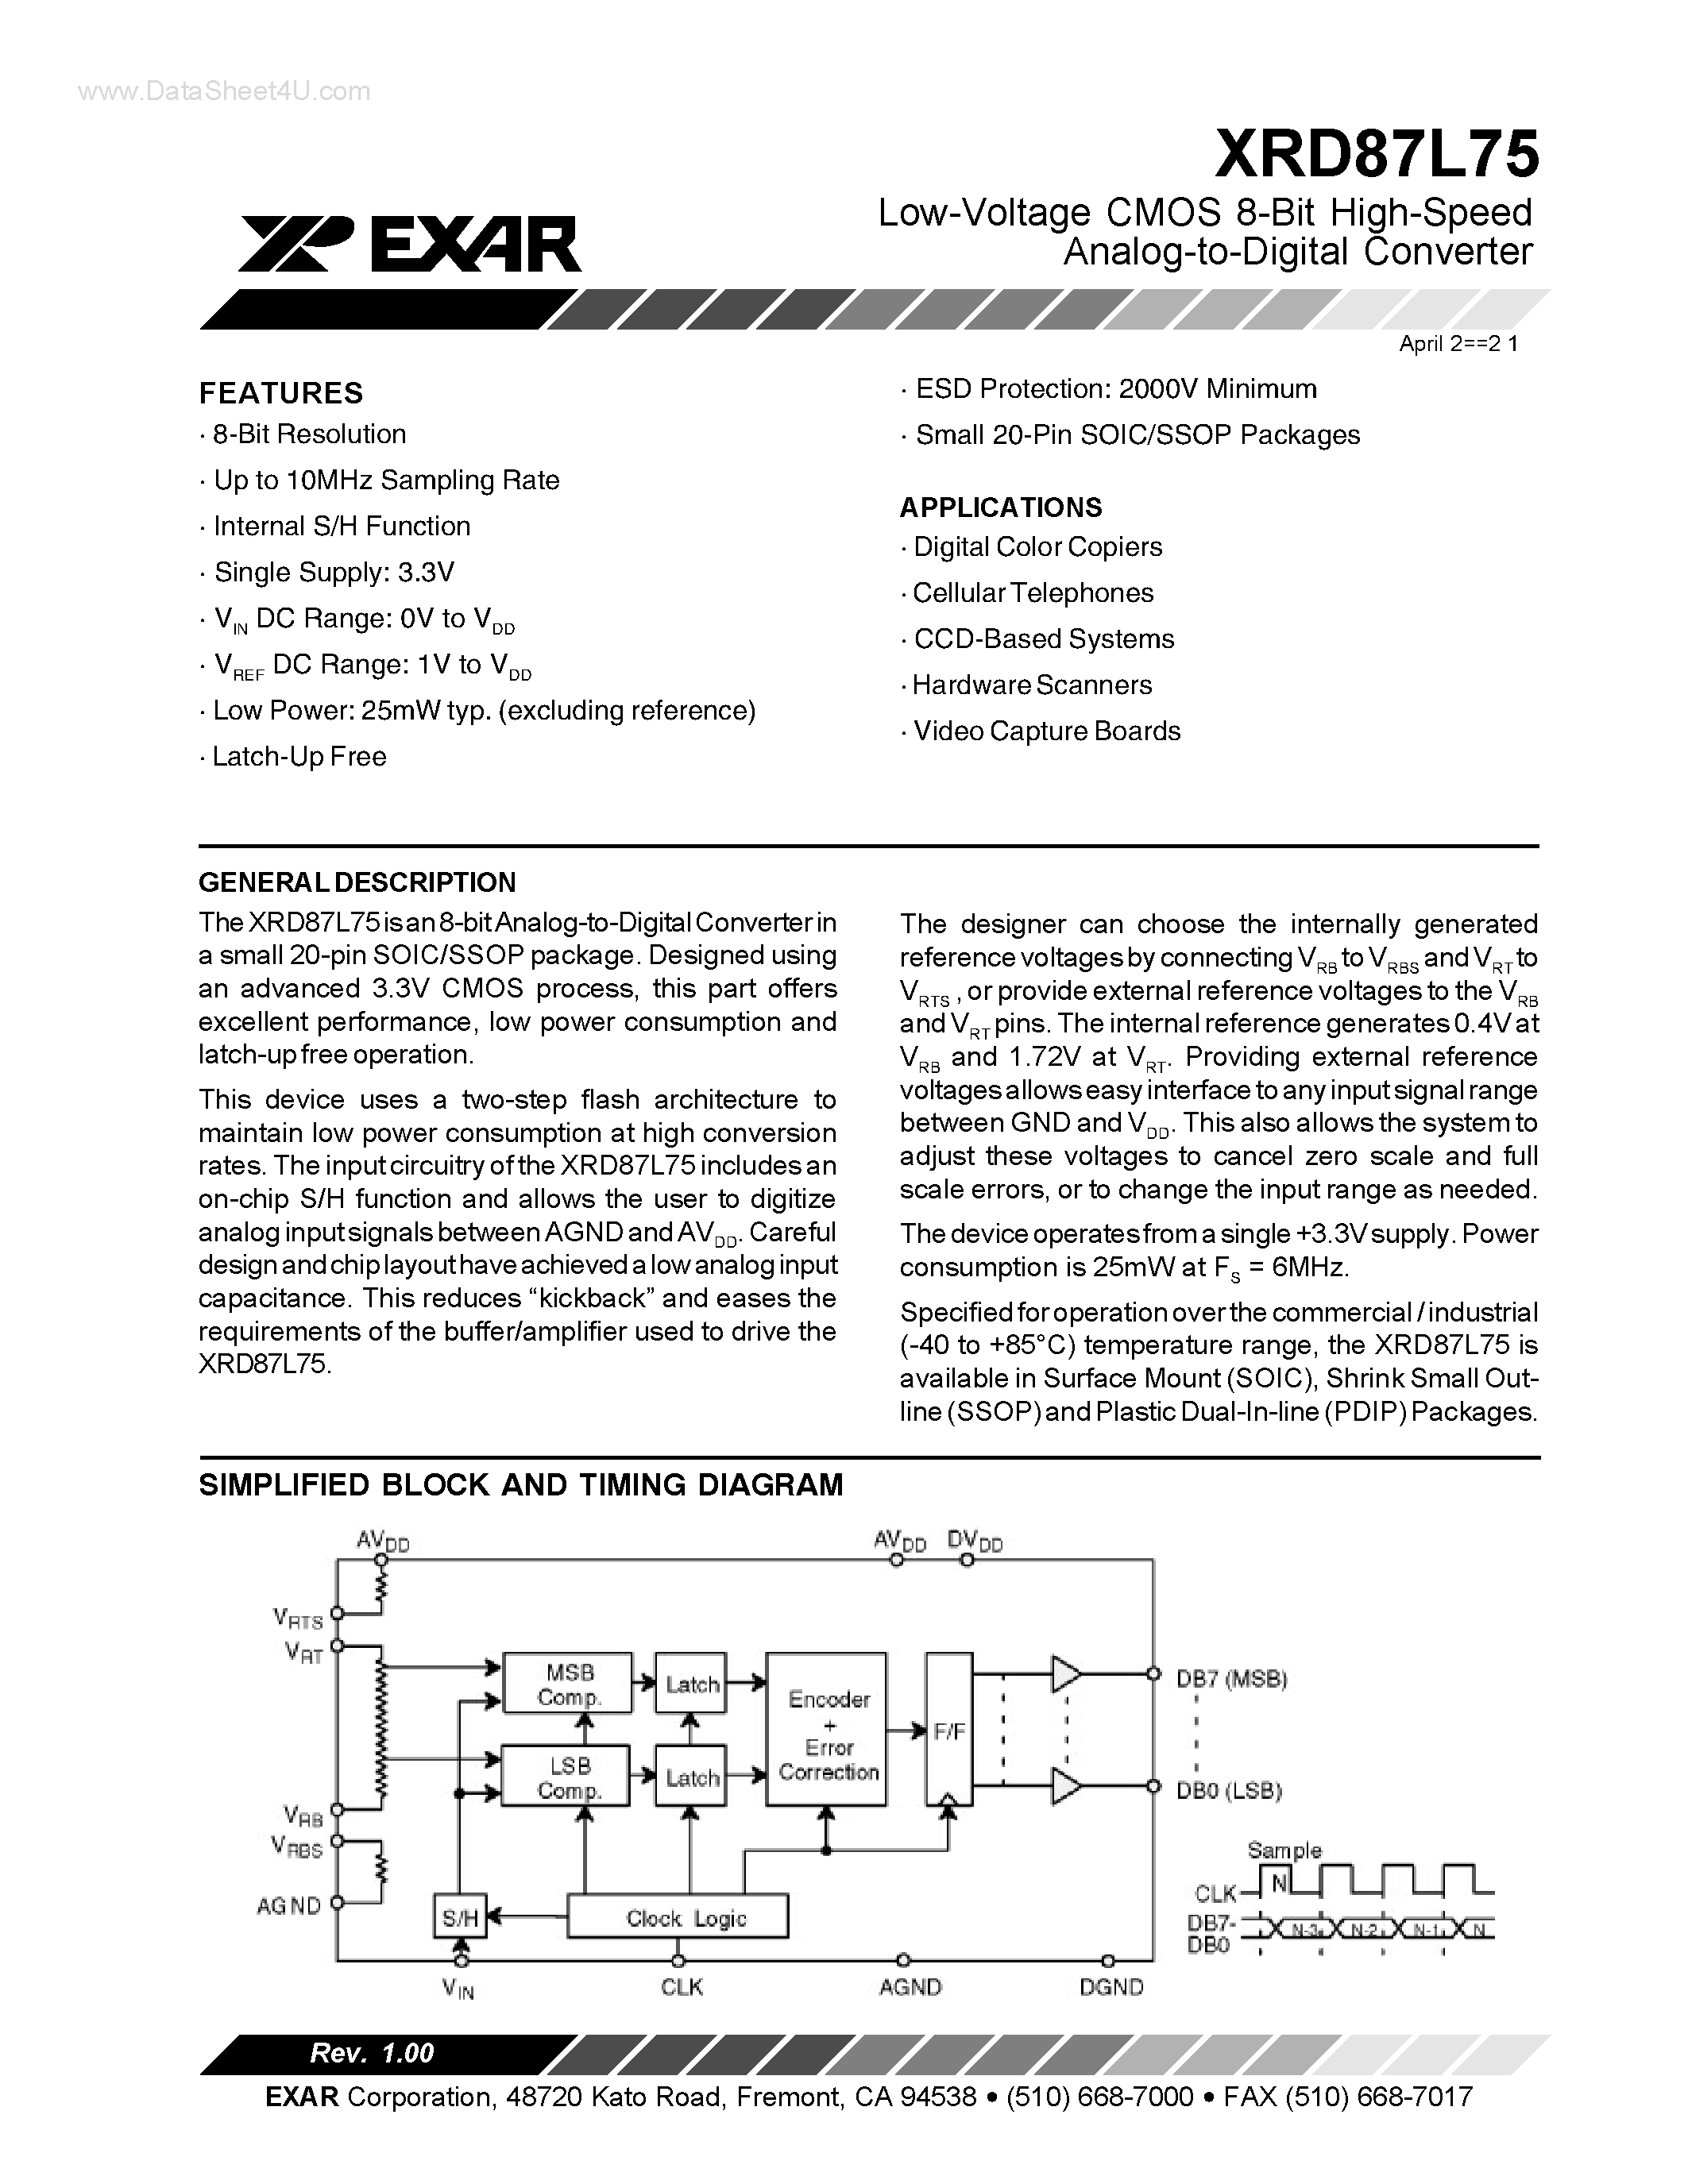 Datasheet XRD87L75 - Low-Voltage CMOS 8-Bit High-Speed Analog-to-Digital Converter page 1